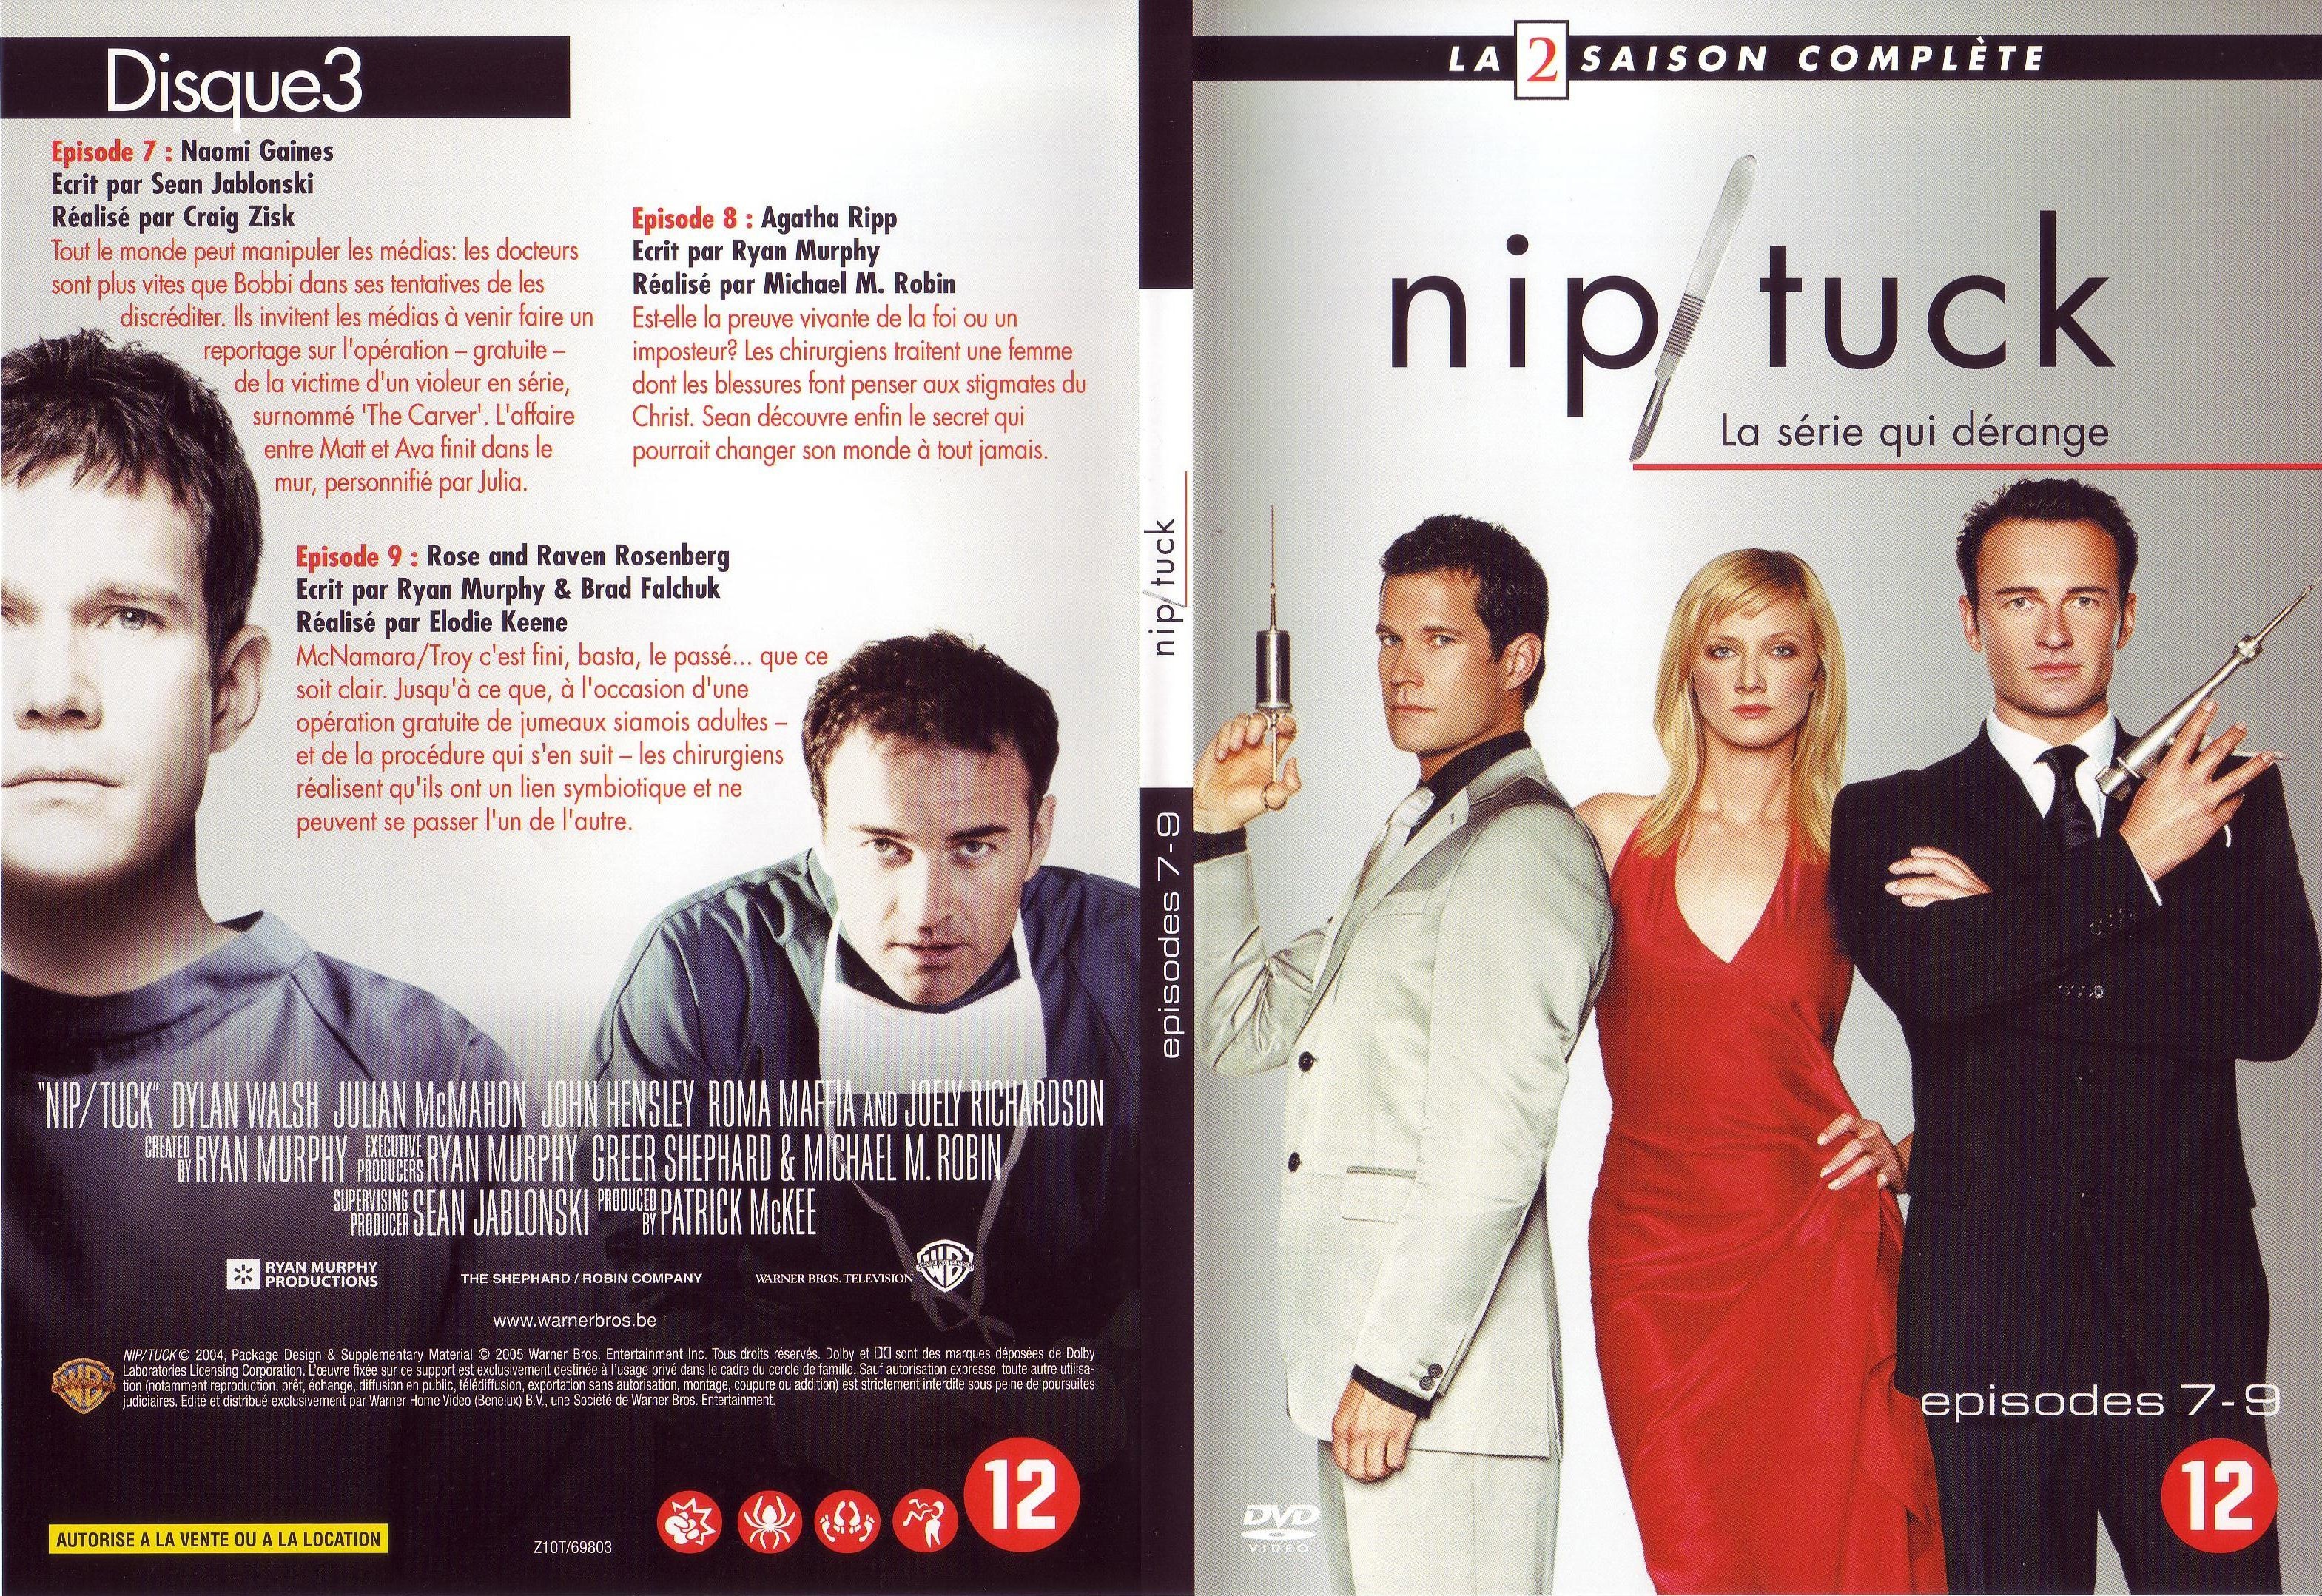 Jaquette DVD Nip-Tuck saison 2 DVD 3